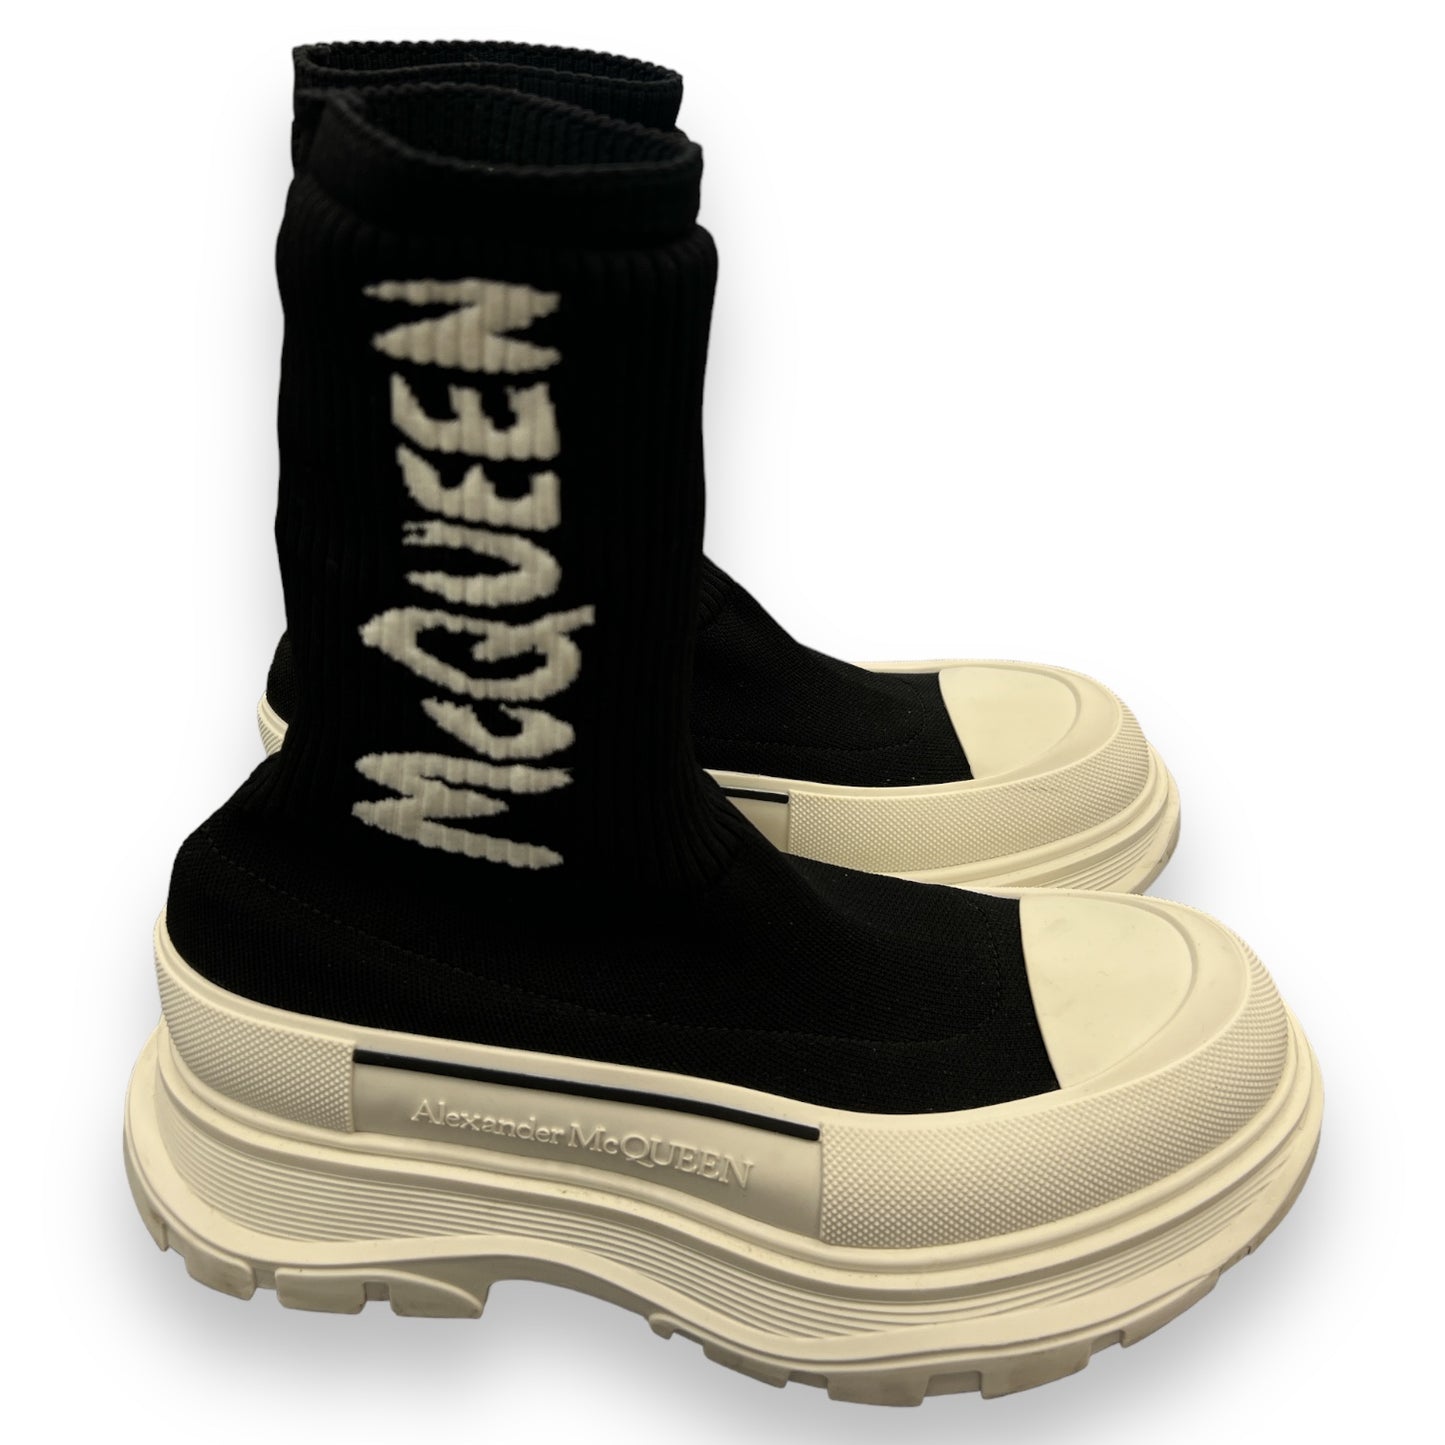 Boots Designer By Alexander Mcqueen  Size: 9